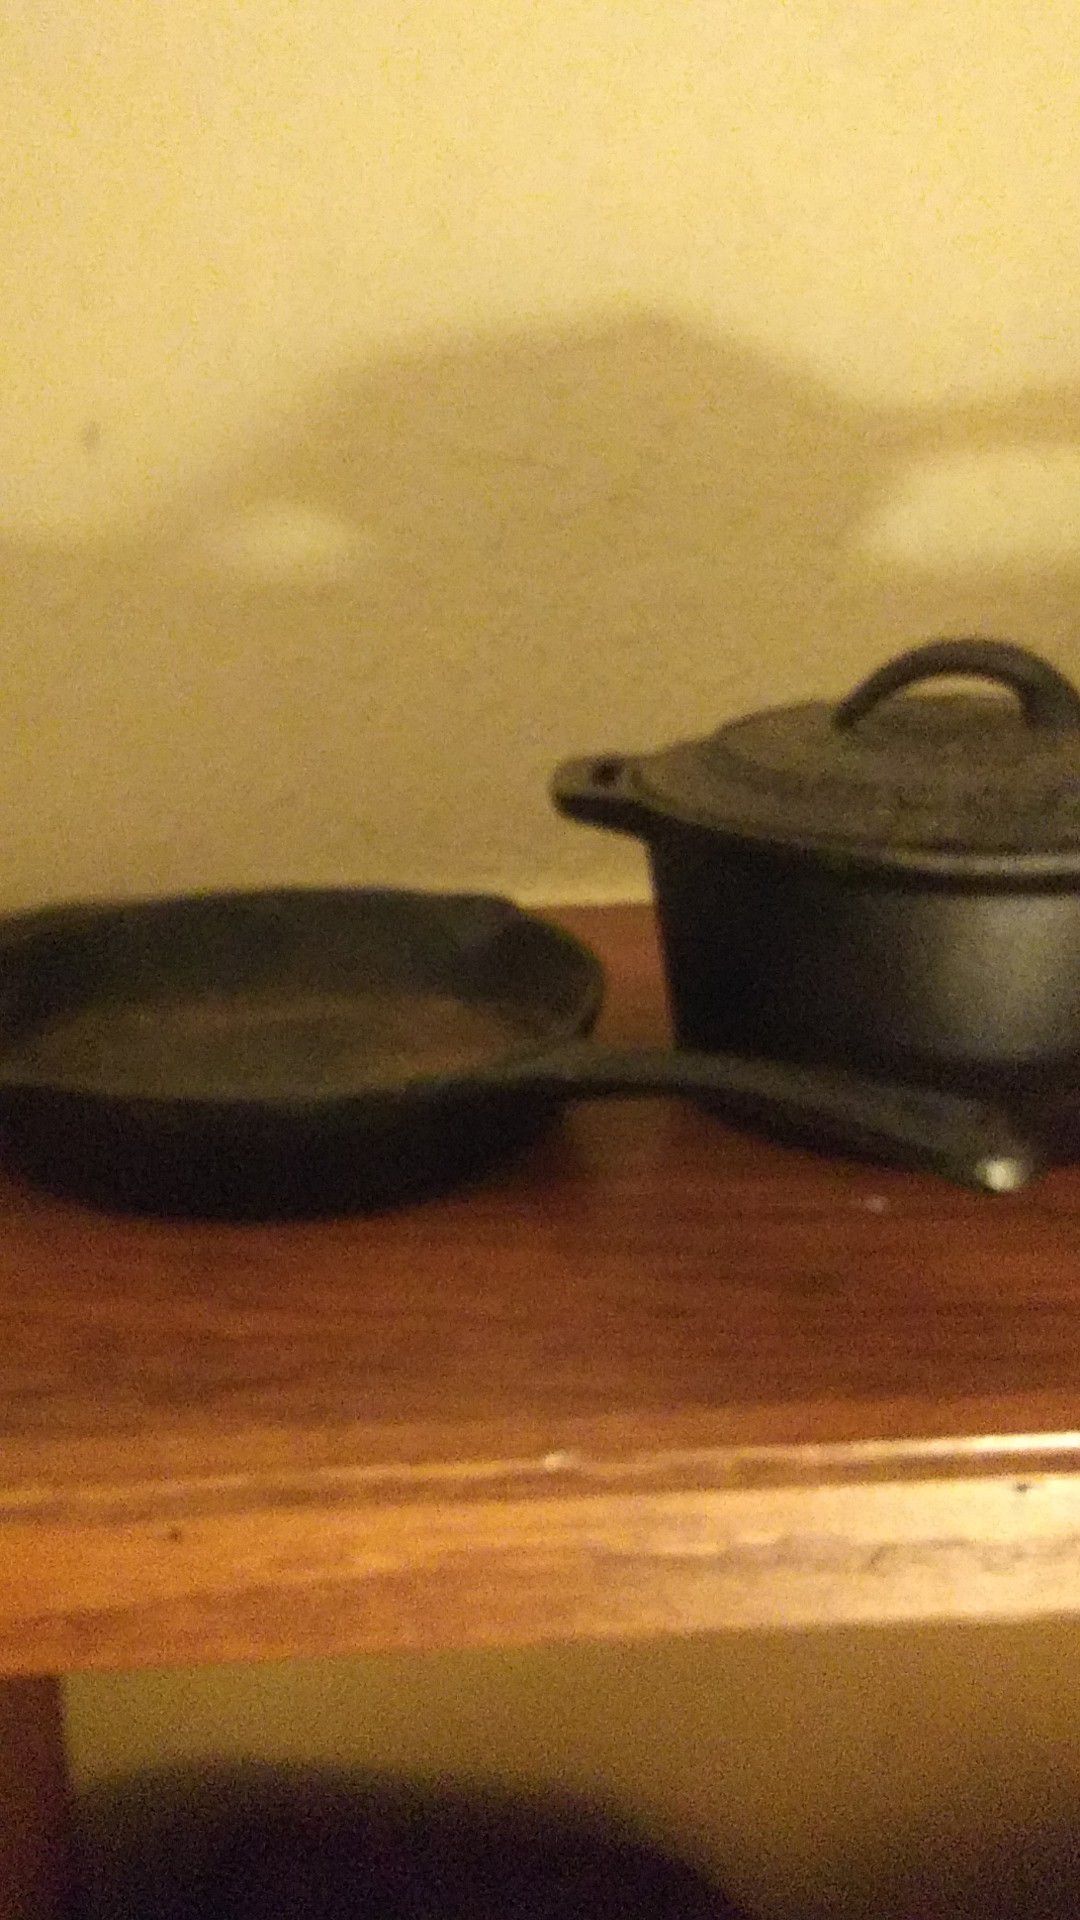 John Wayne Cast Iron sauce pot w/ lid, and 6in. Cast iron skillet.